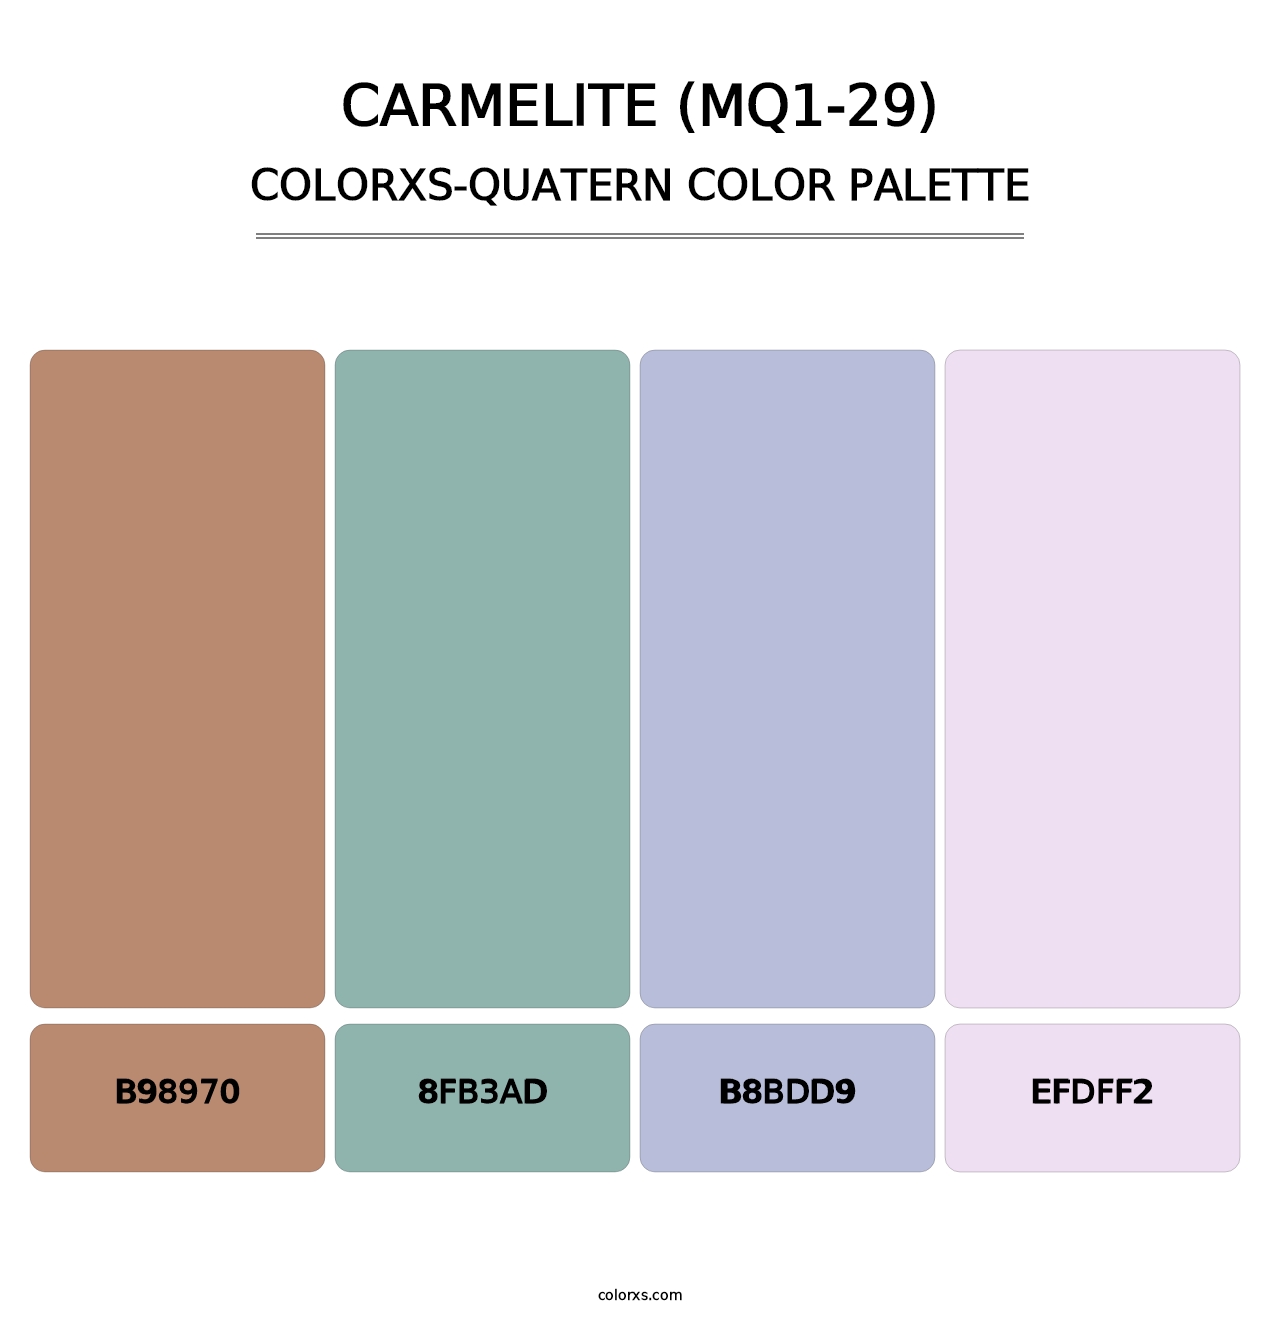 Carmelite (MQ1-29) - Colorxs Quatern Palette